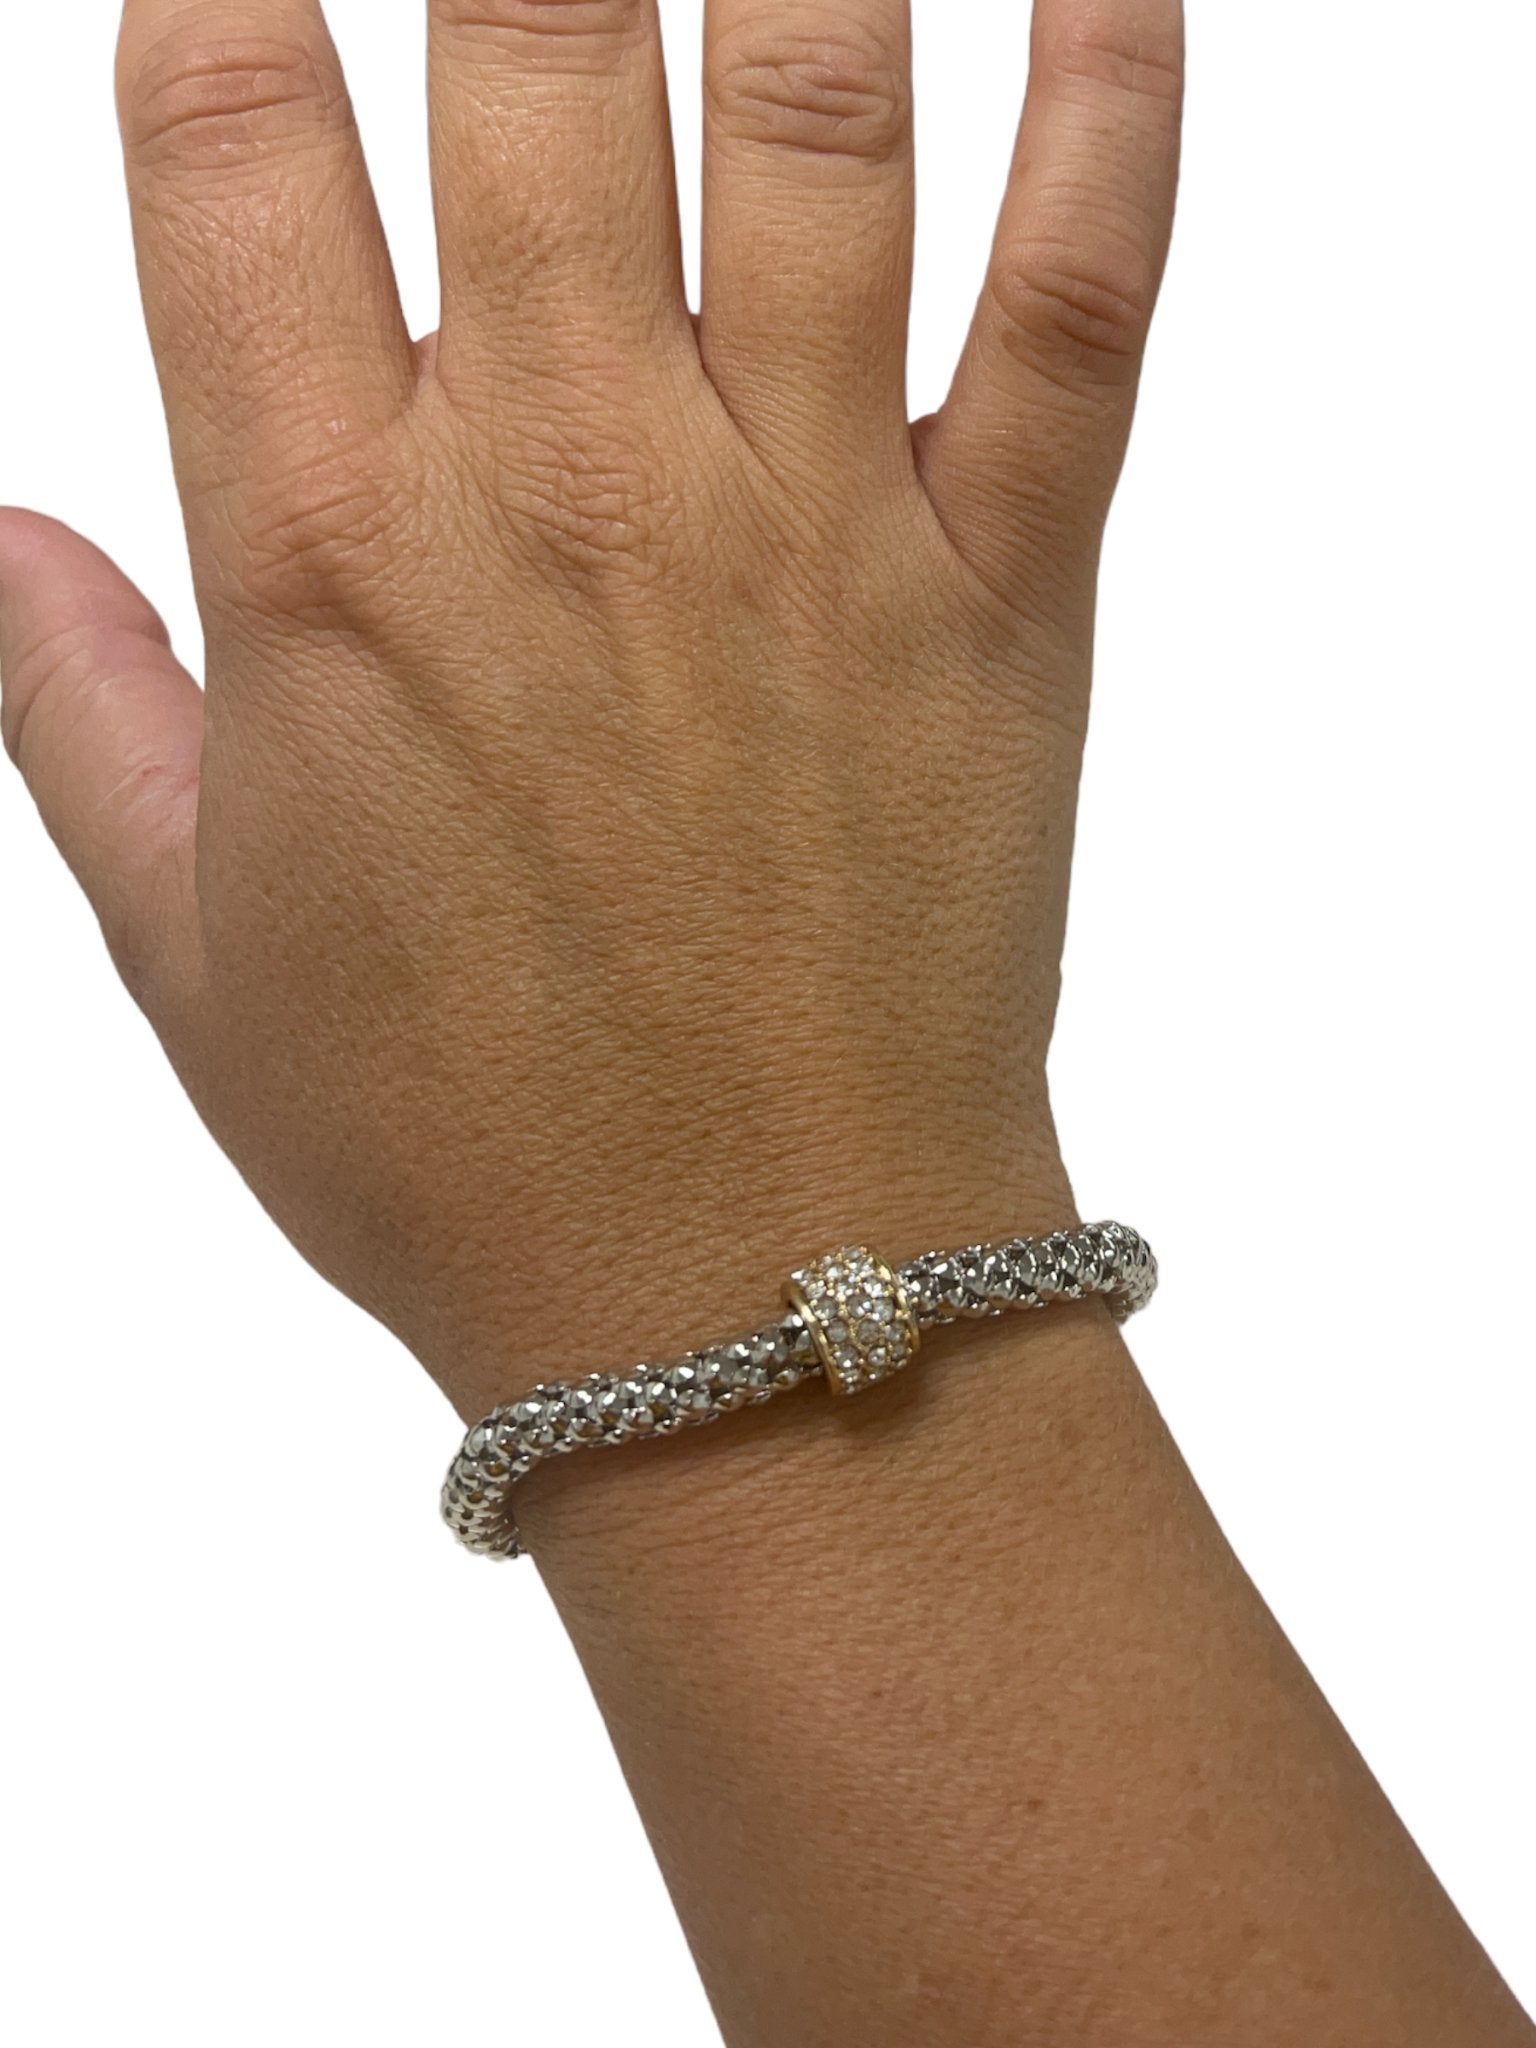 Silver slip on bracelets - The Bump & Company LLC